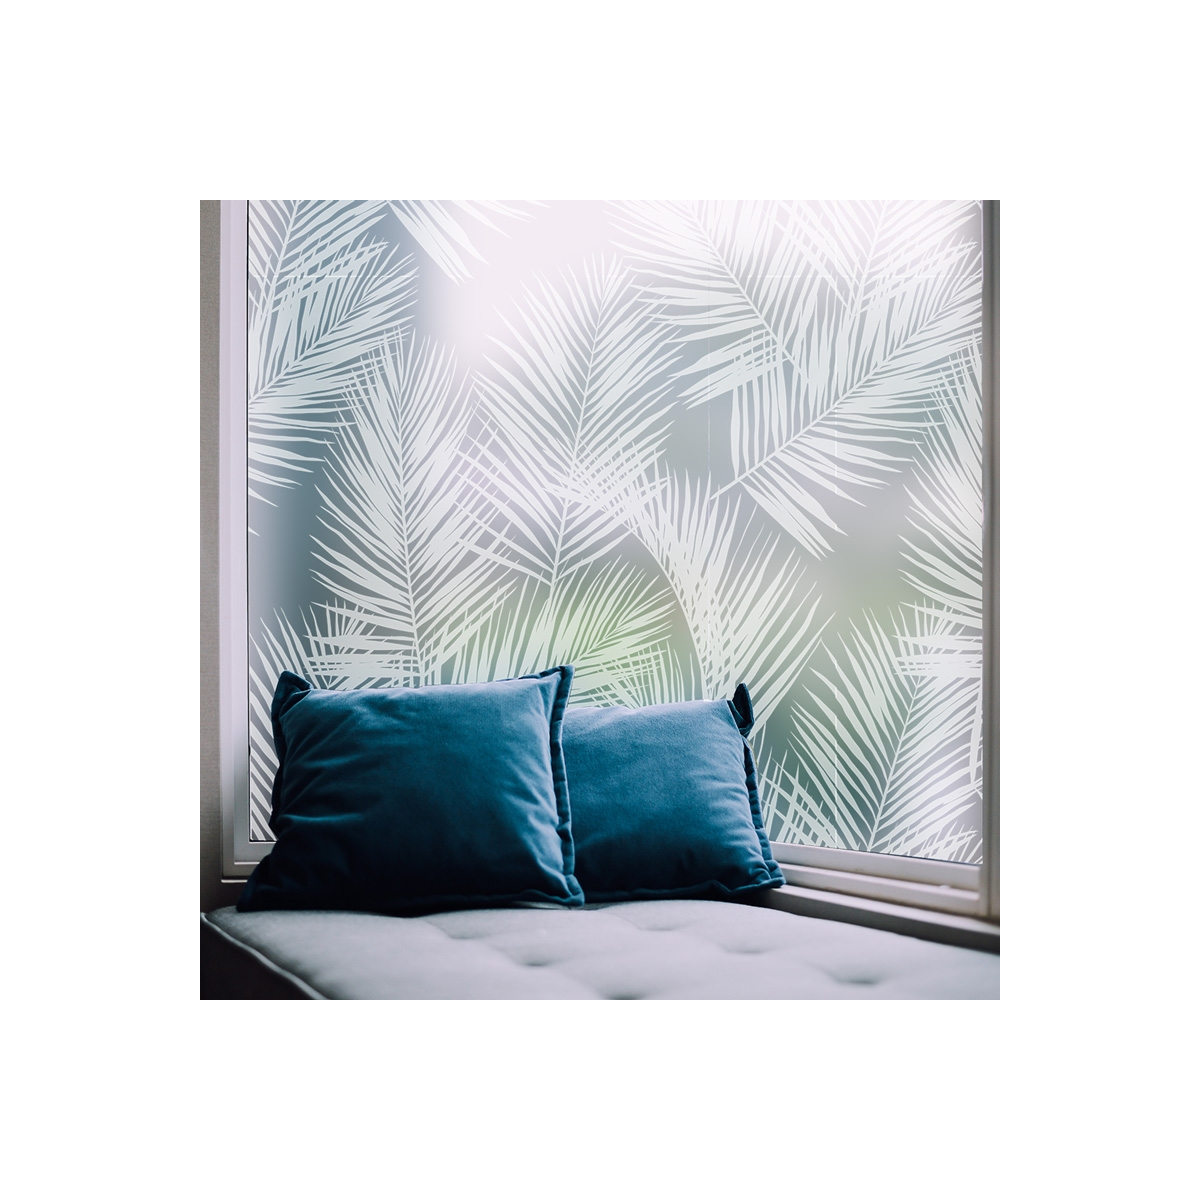 Vinilo decorativo para ventanas Hojas de palmera | Acte-Deco